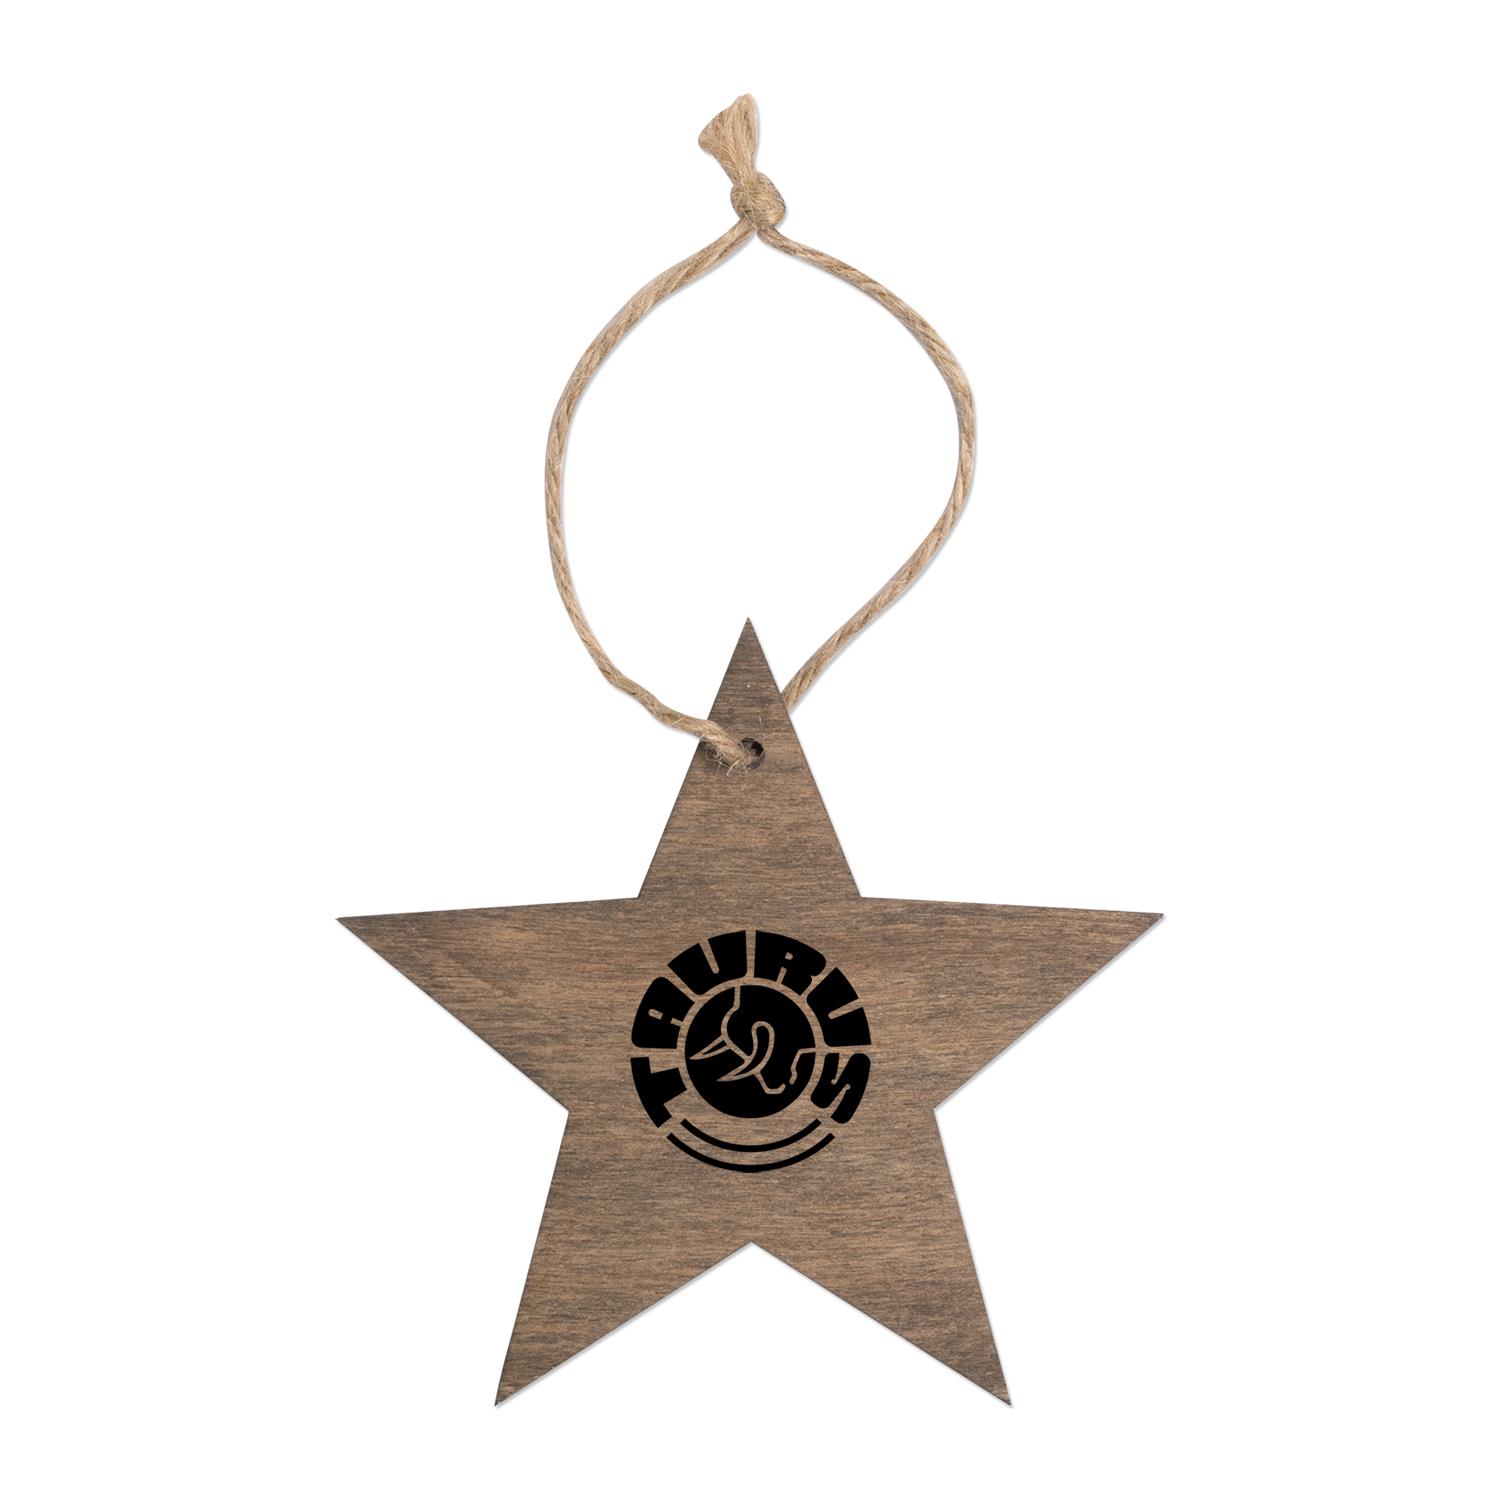 S71412x Wooden Star Ornament